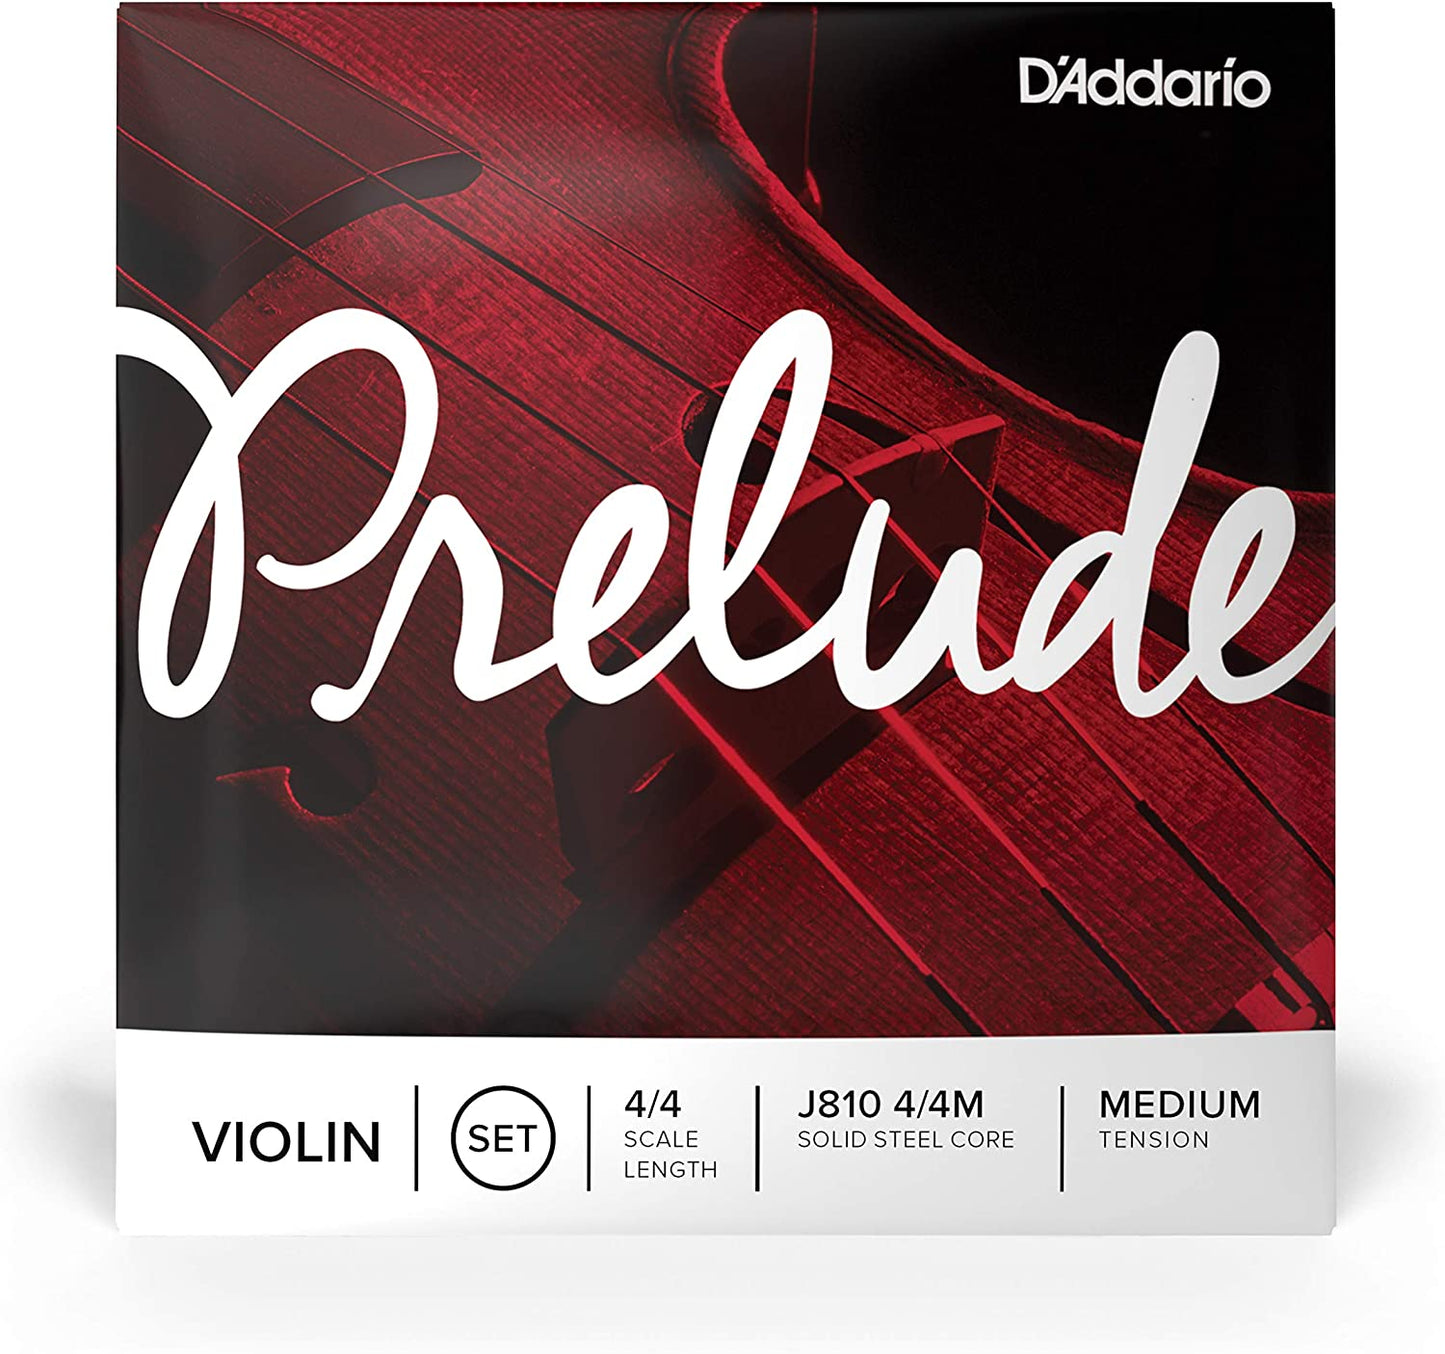 D’Addario J810 Prelude Violin 4/4 Scale Medium Tension